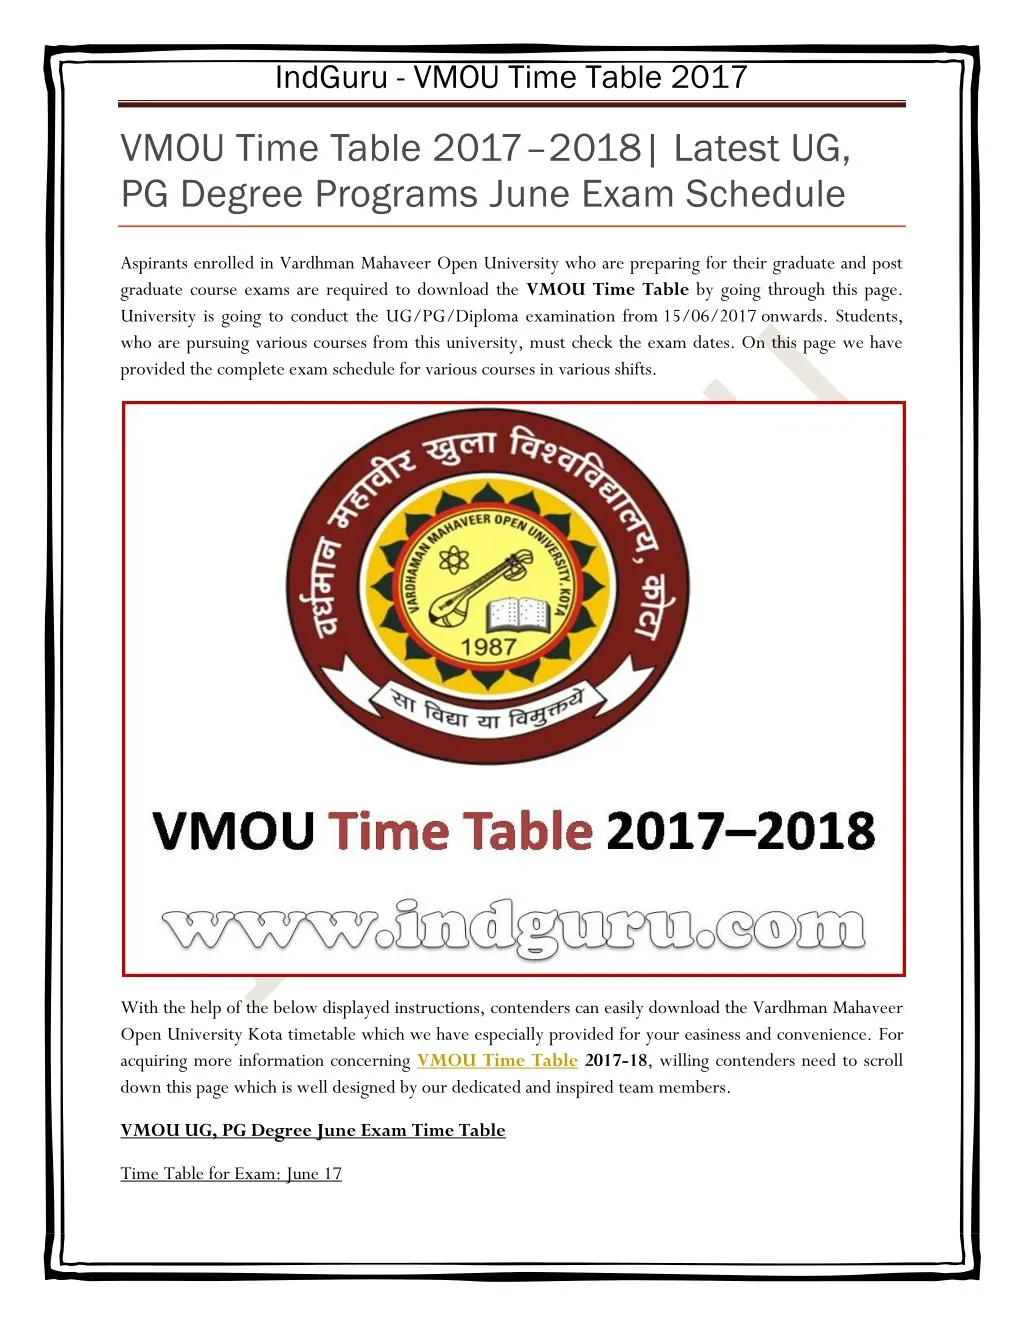 indguru vmou time table 2017